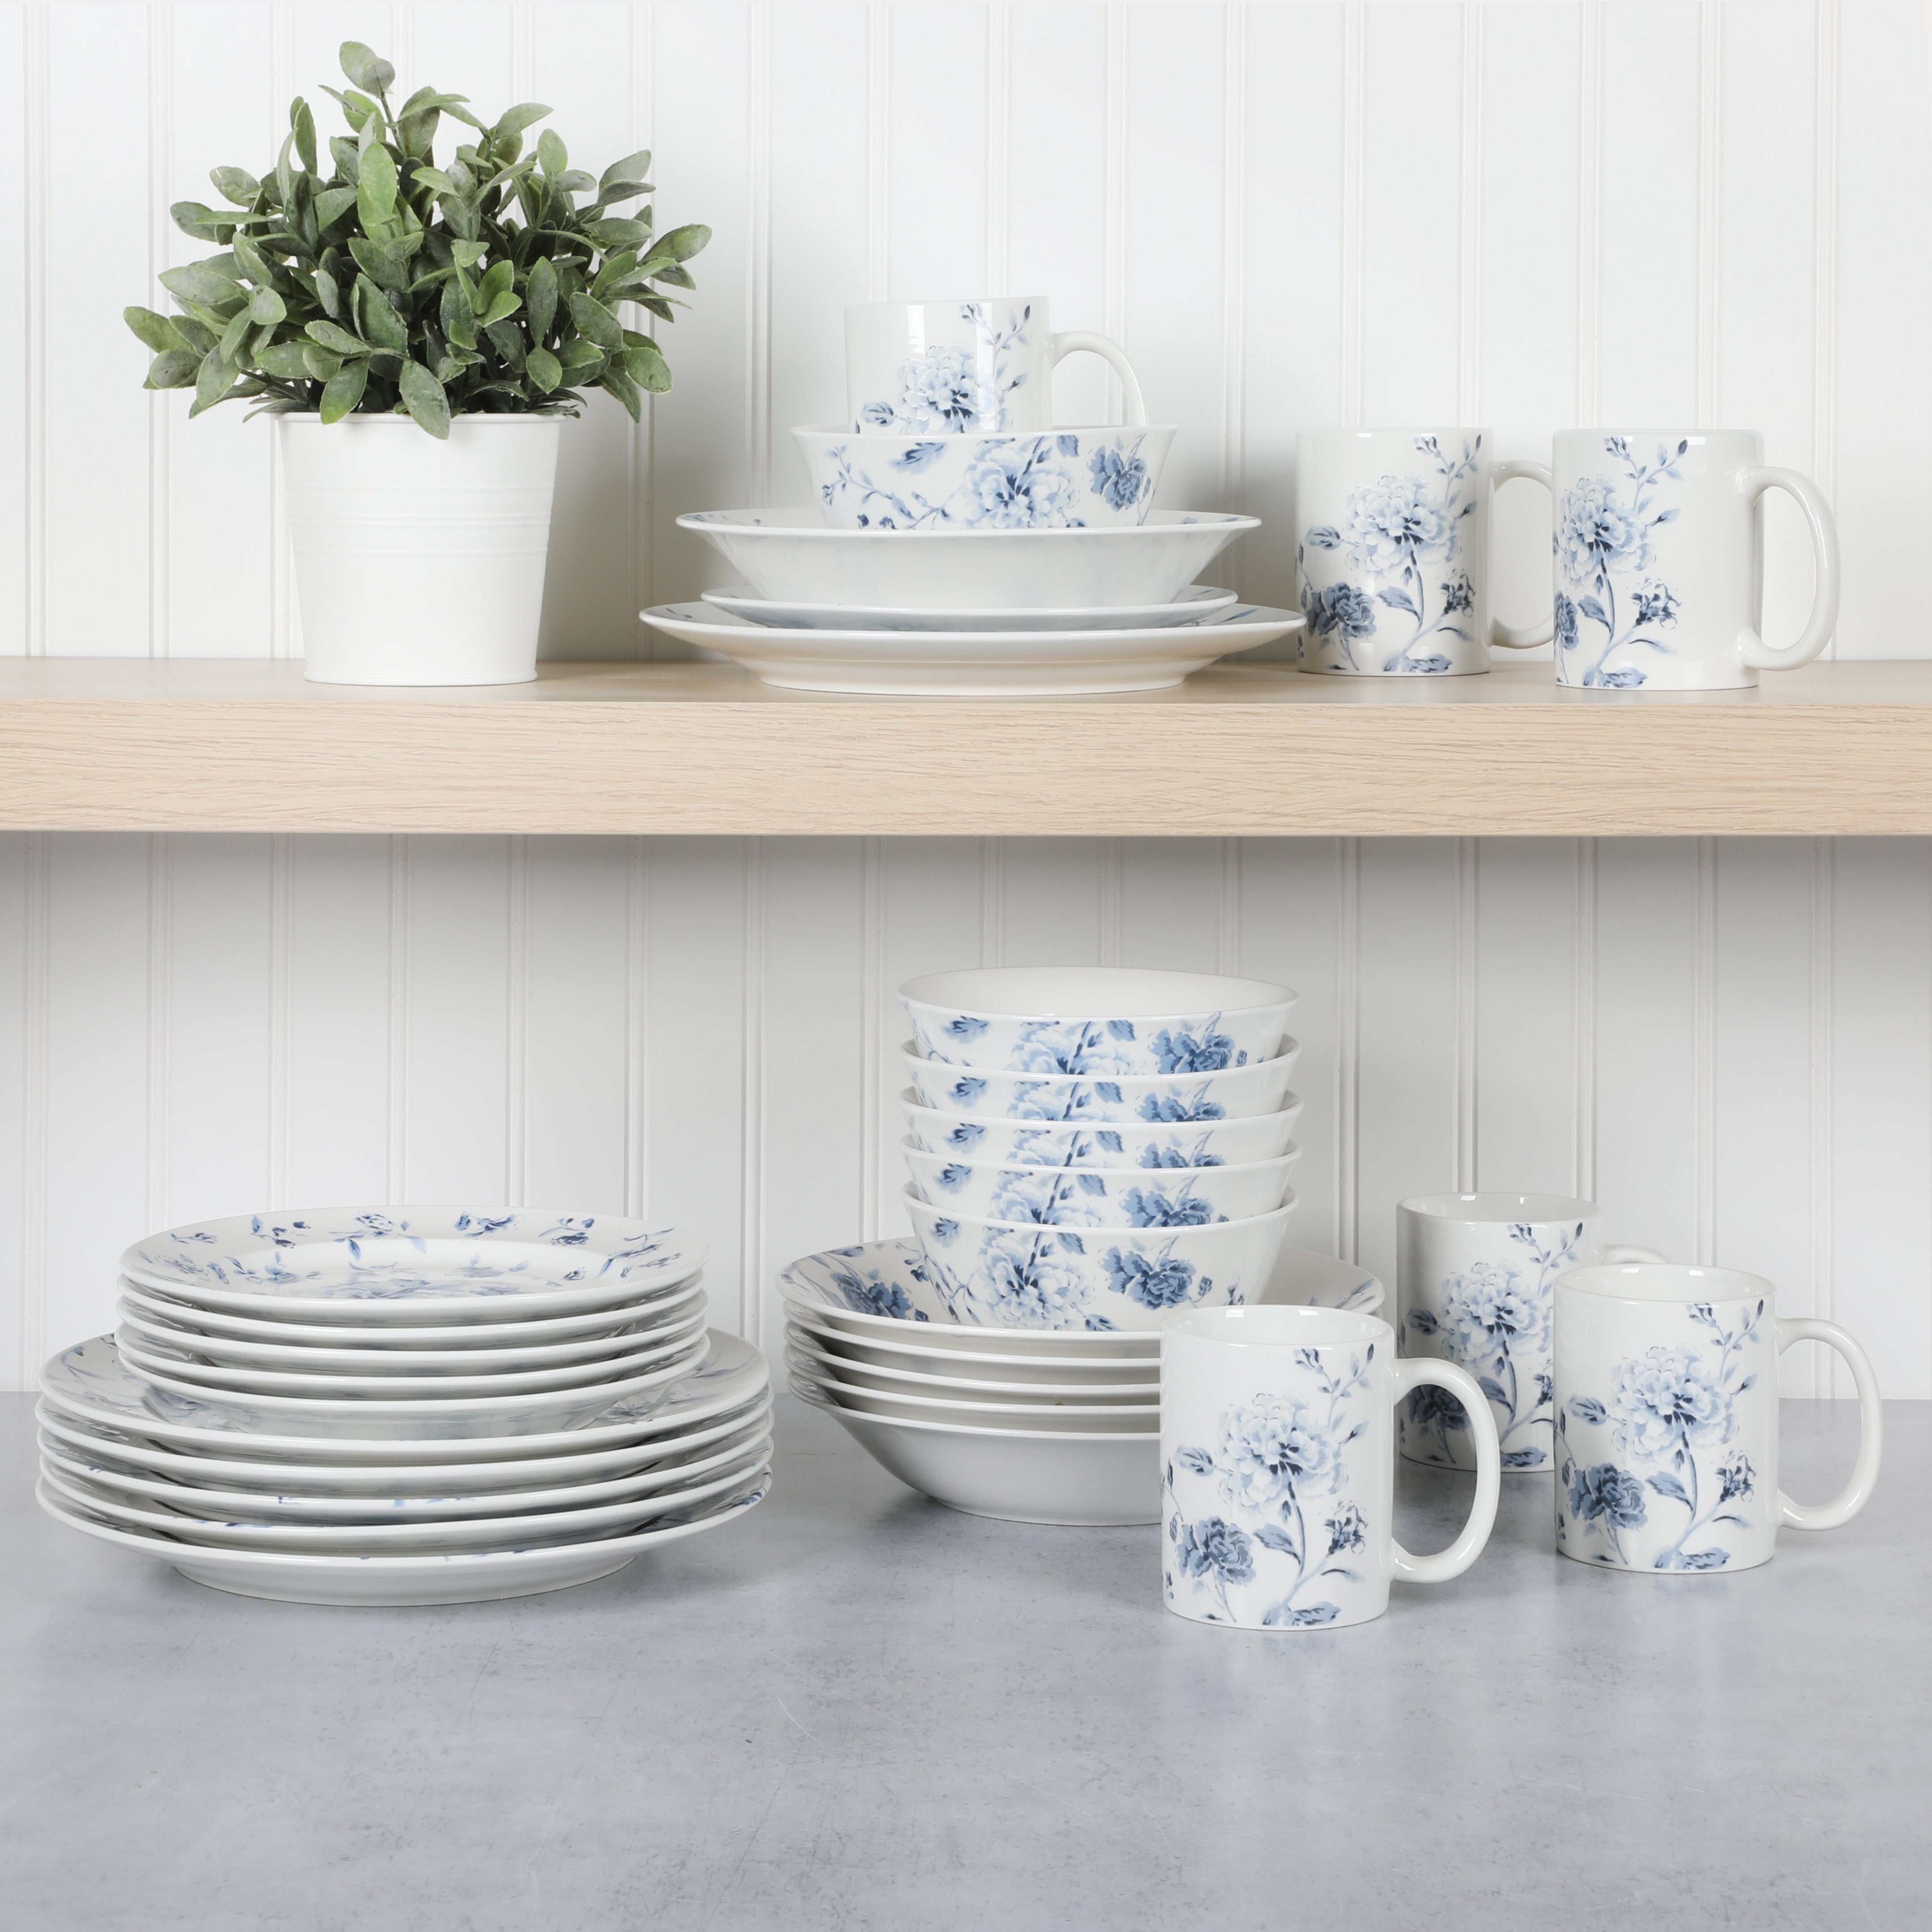 Martha Stewart Empress Bouquet 30-Piece Decorated Porcelain Dinnerware Plates and Bowls Set - Blue Floral